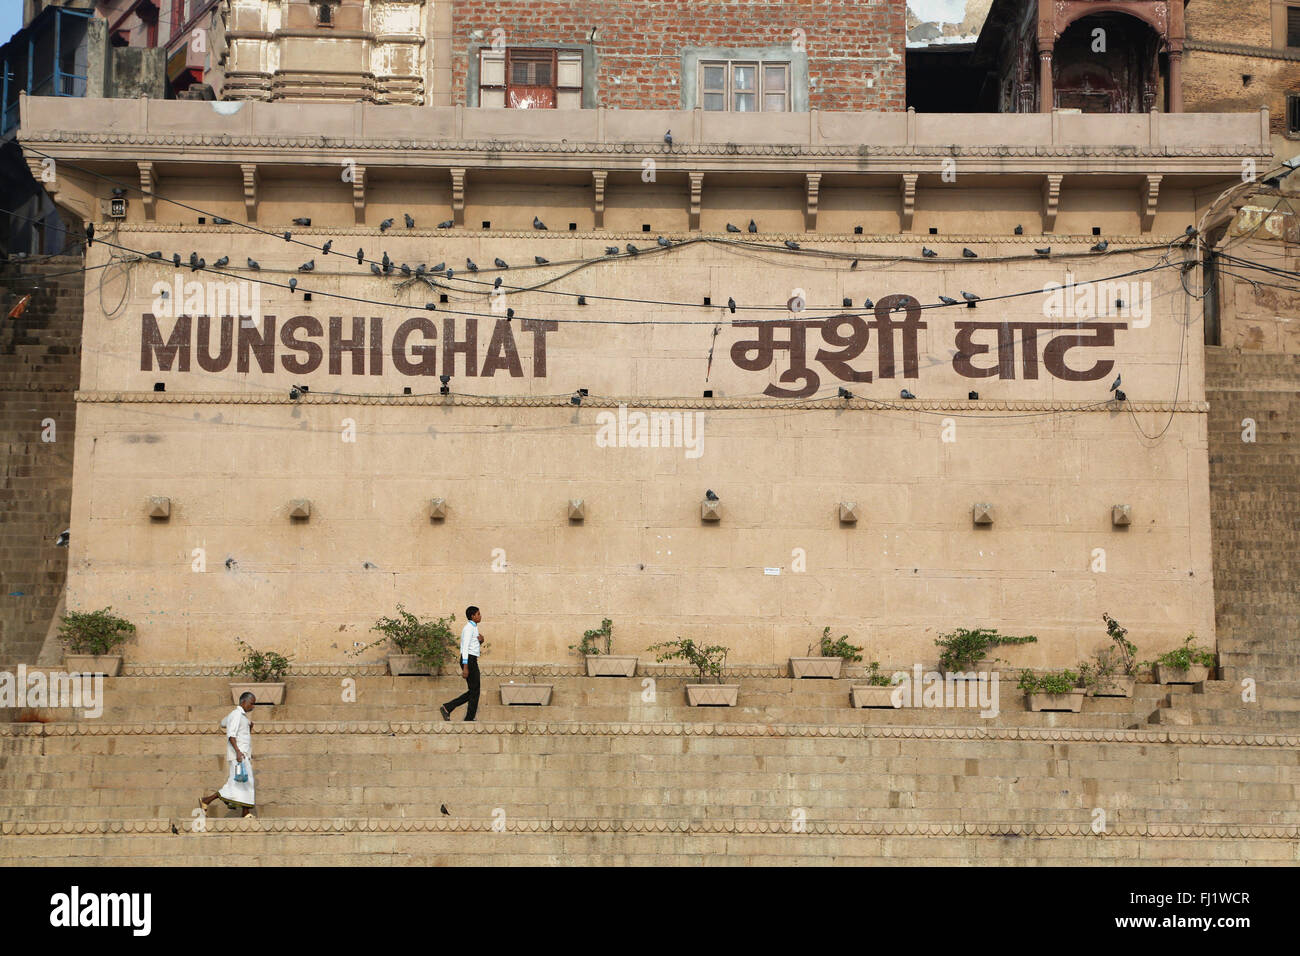 Munshi ghat - Varanasi, India - Architecture Stock Photo